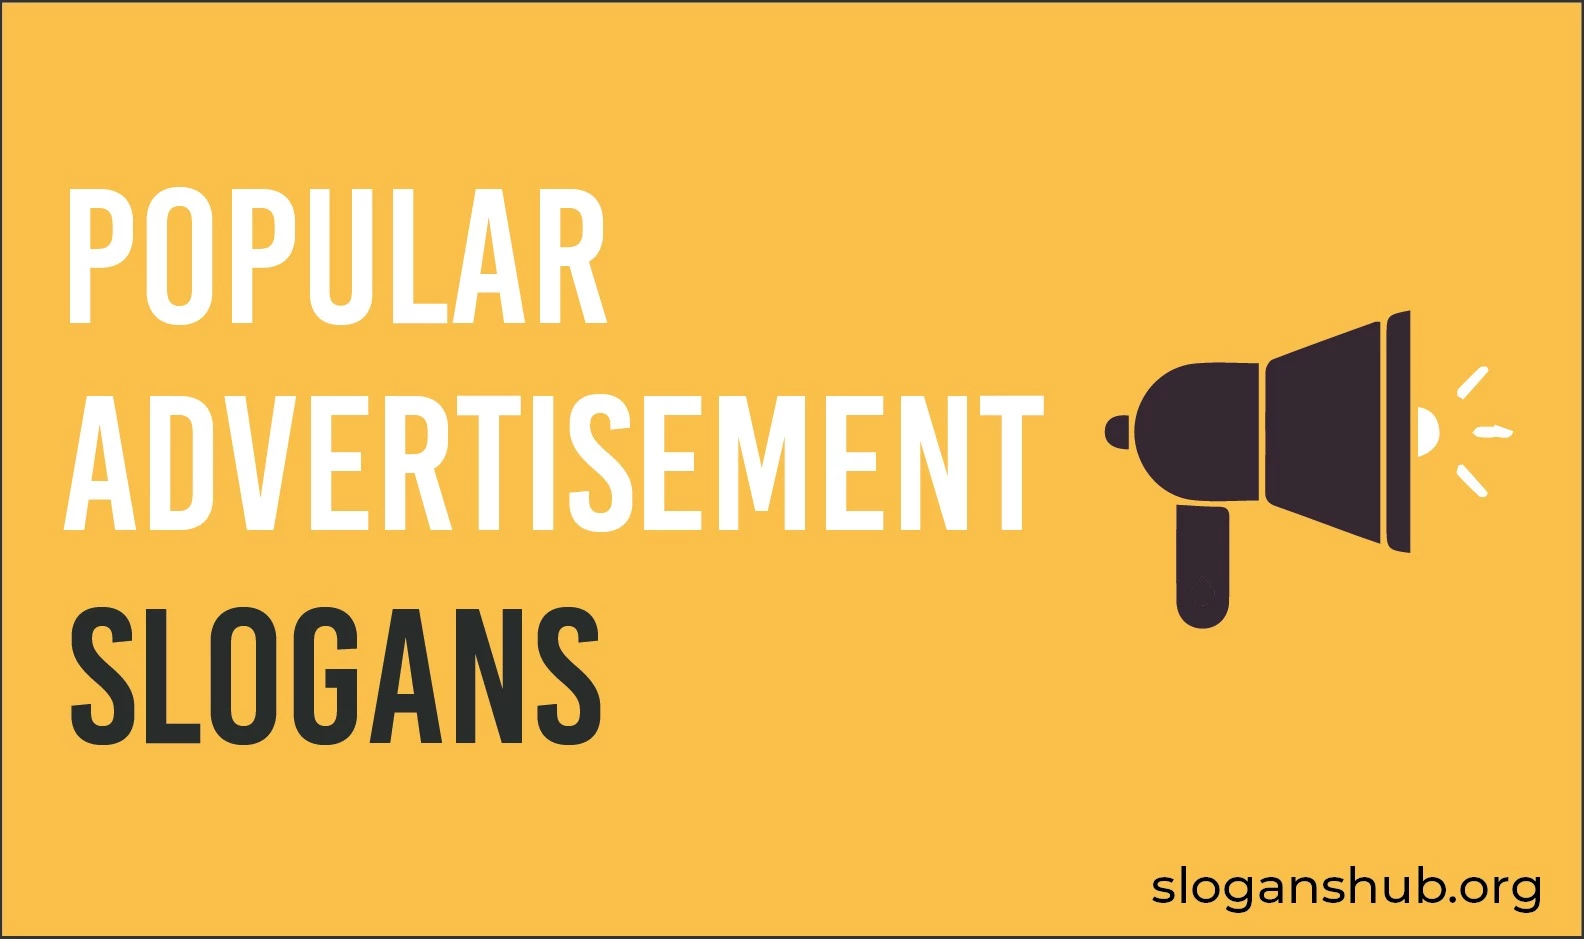 List of Popular Advertisement Slogans